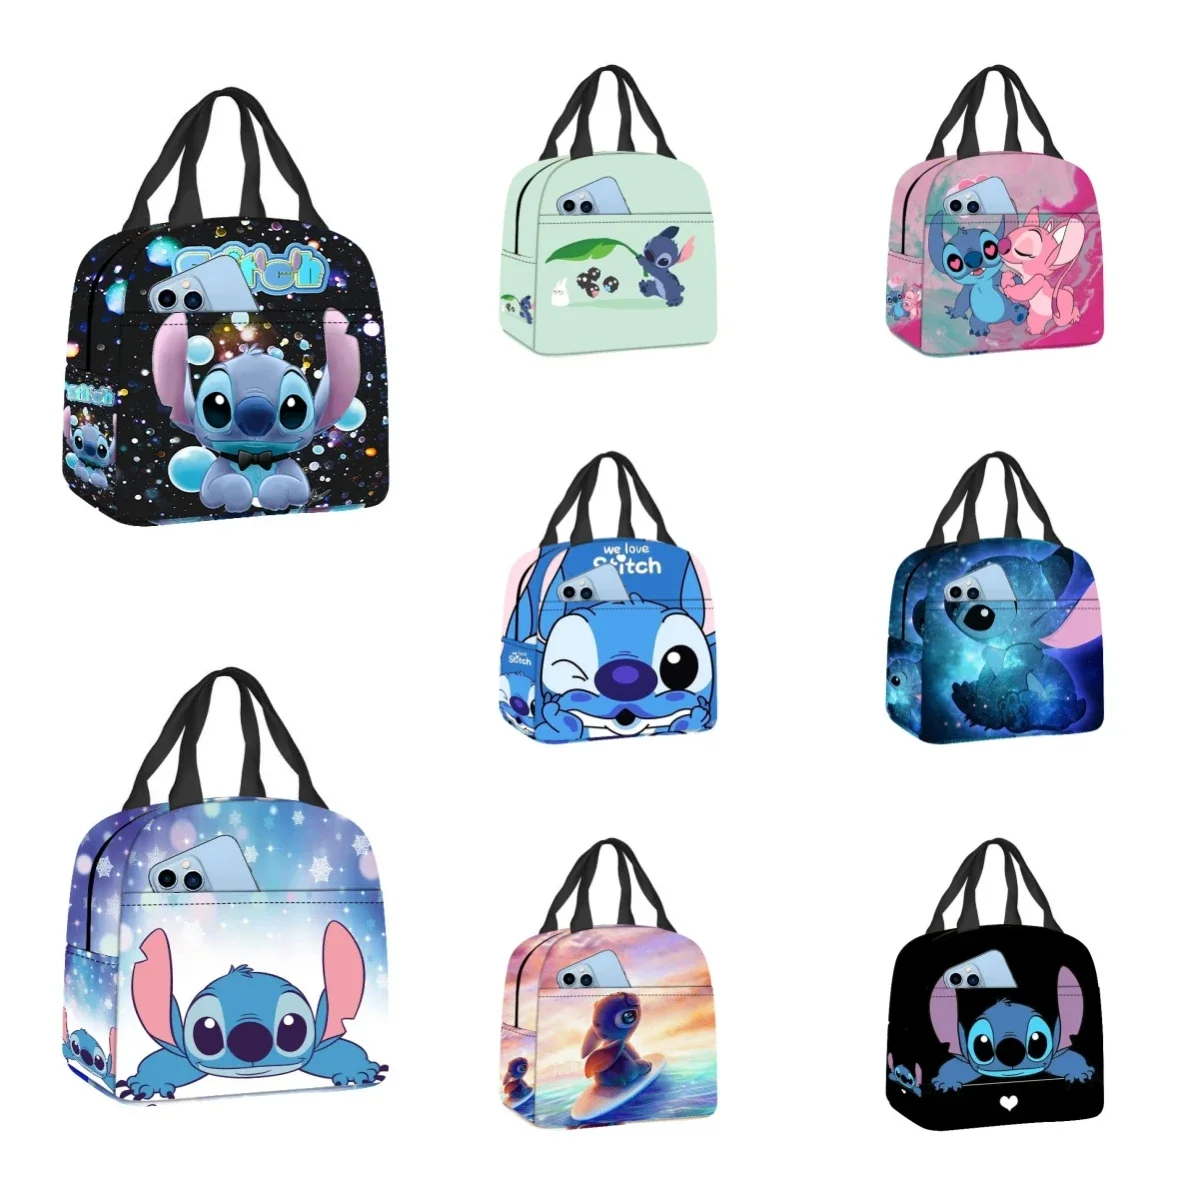 Disney Lilo Stitch Cute Cartoon Printing Lunch Bag Student Portable Insulation Effect Lunch Box Bag Oxford Fabric Material Bag